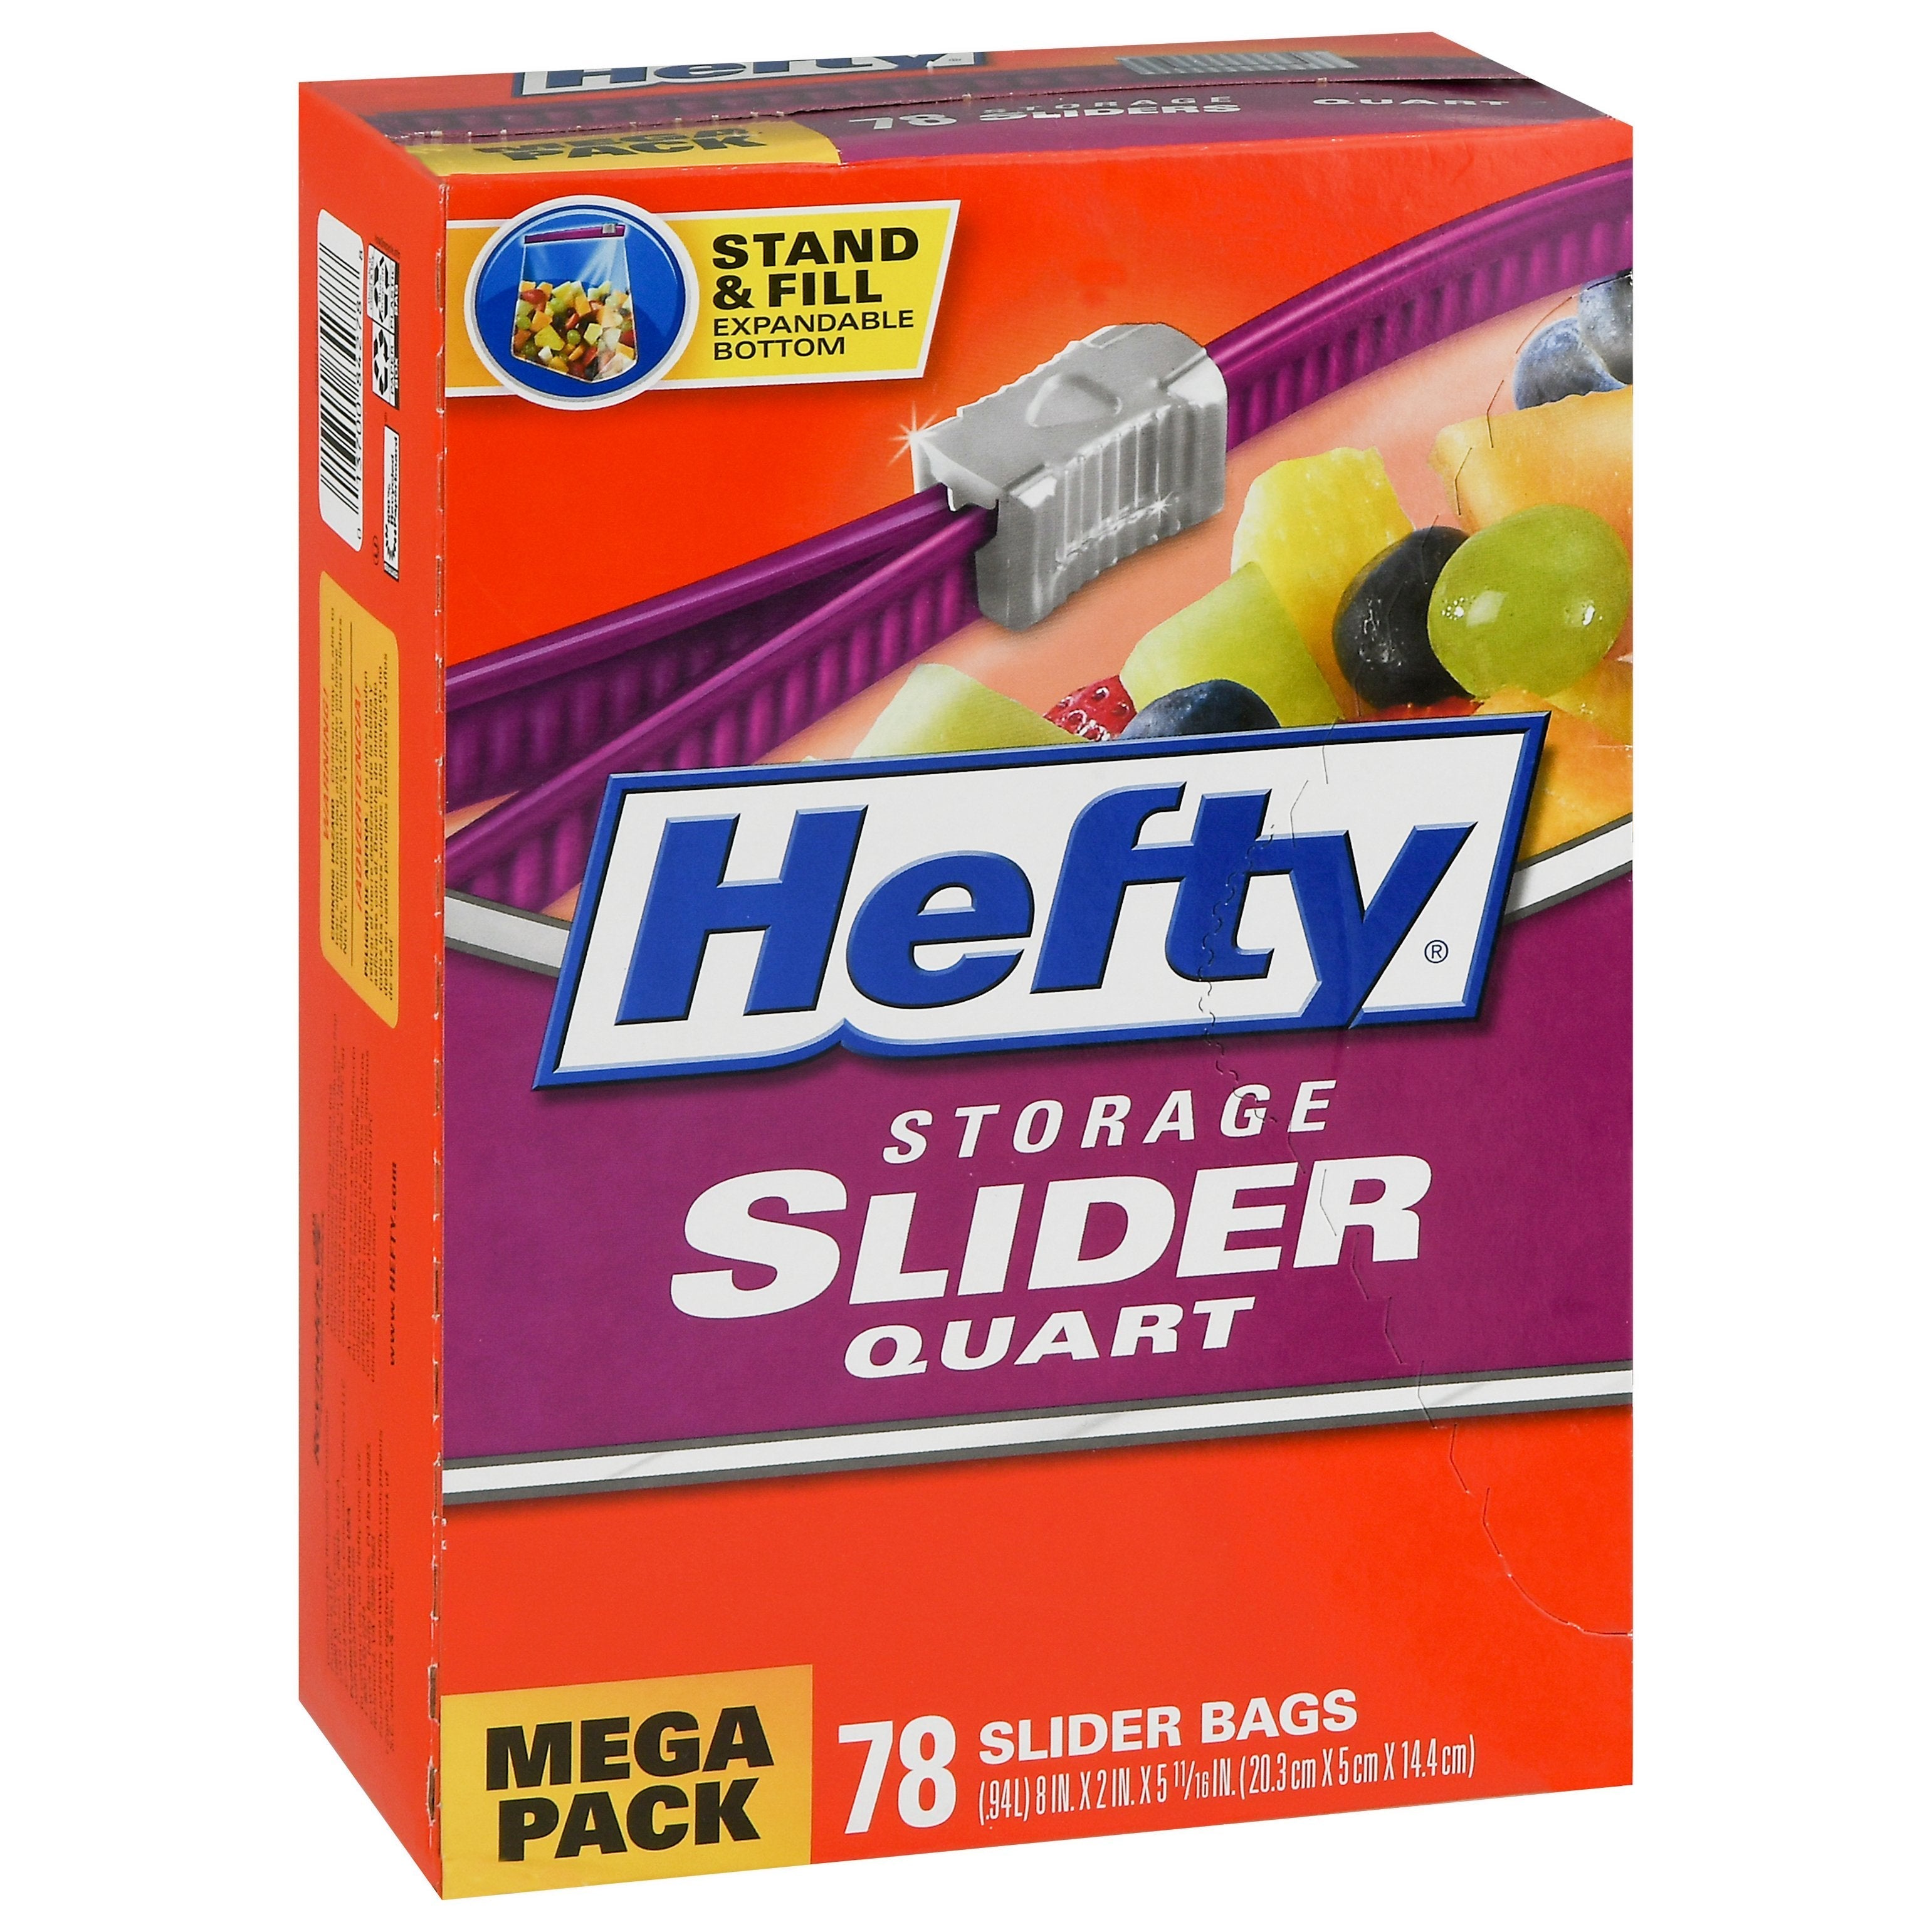 Hefty Storage Quart Slider Bags, 20 count